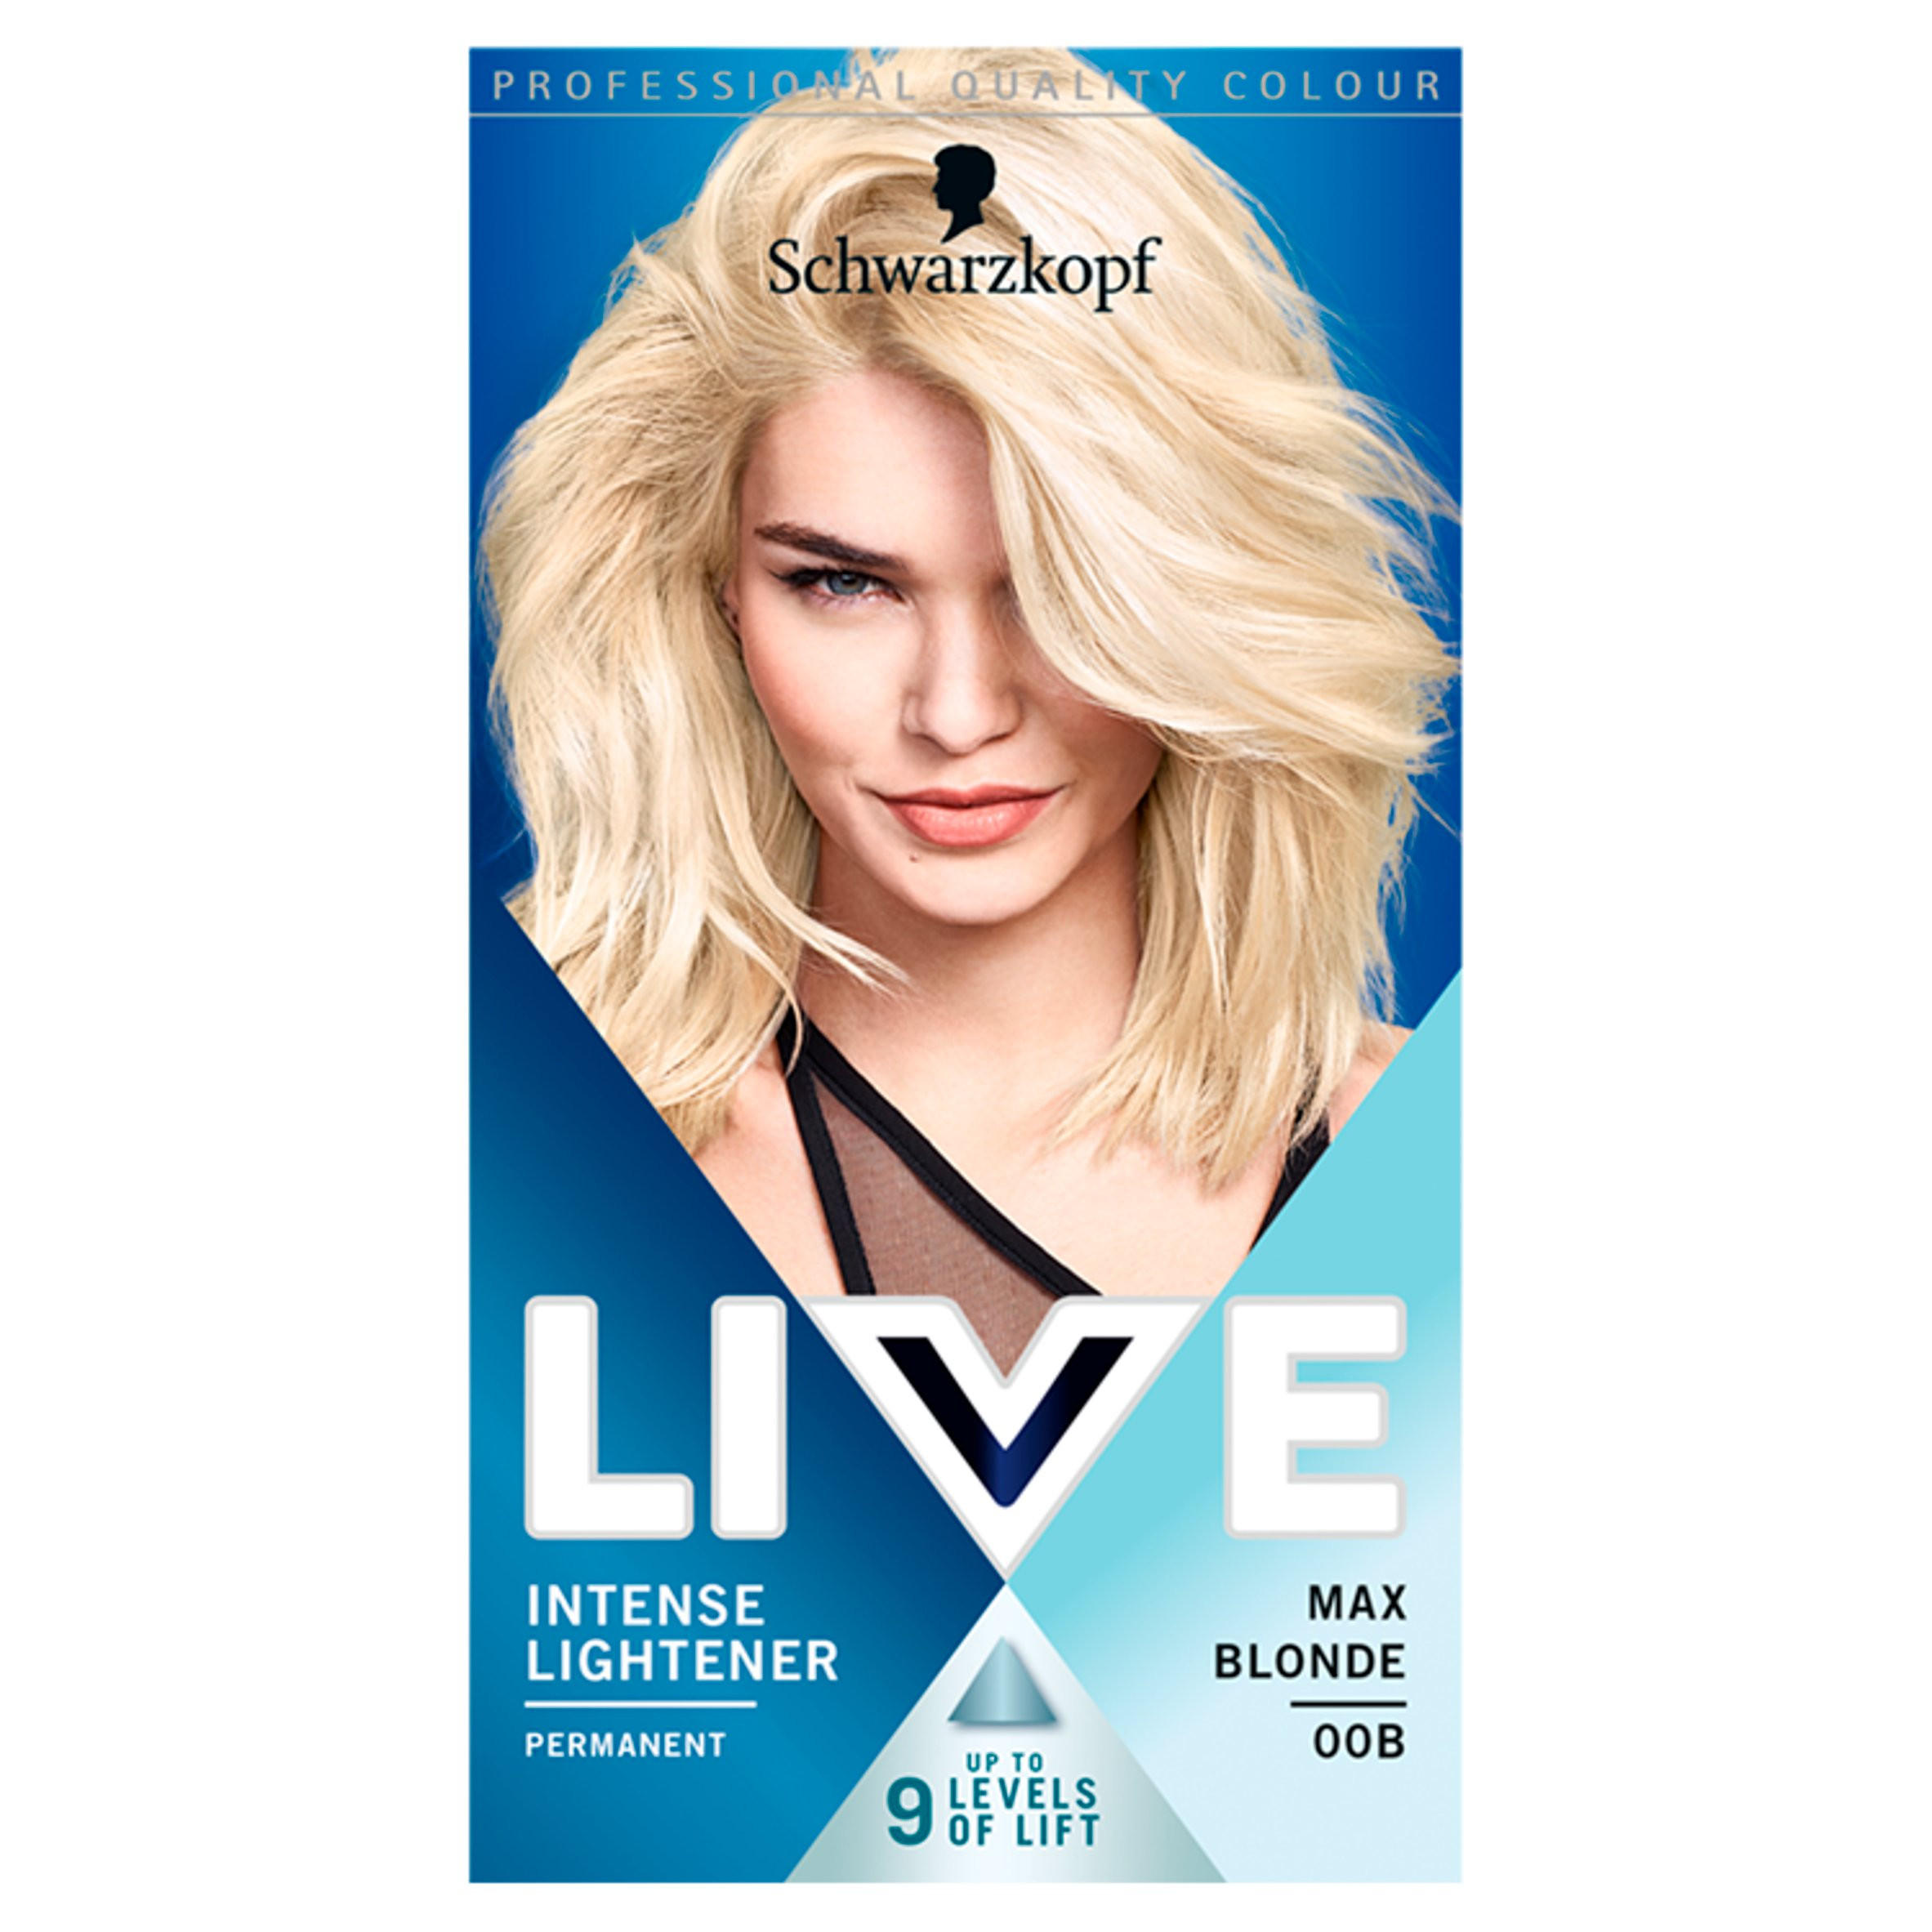 Live blonde hair dye